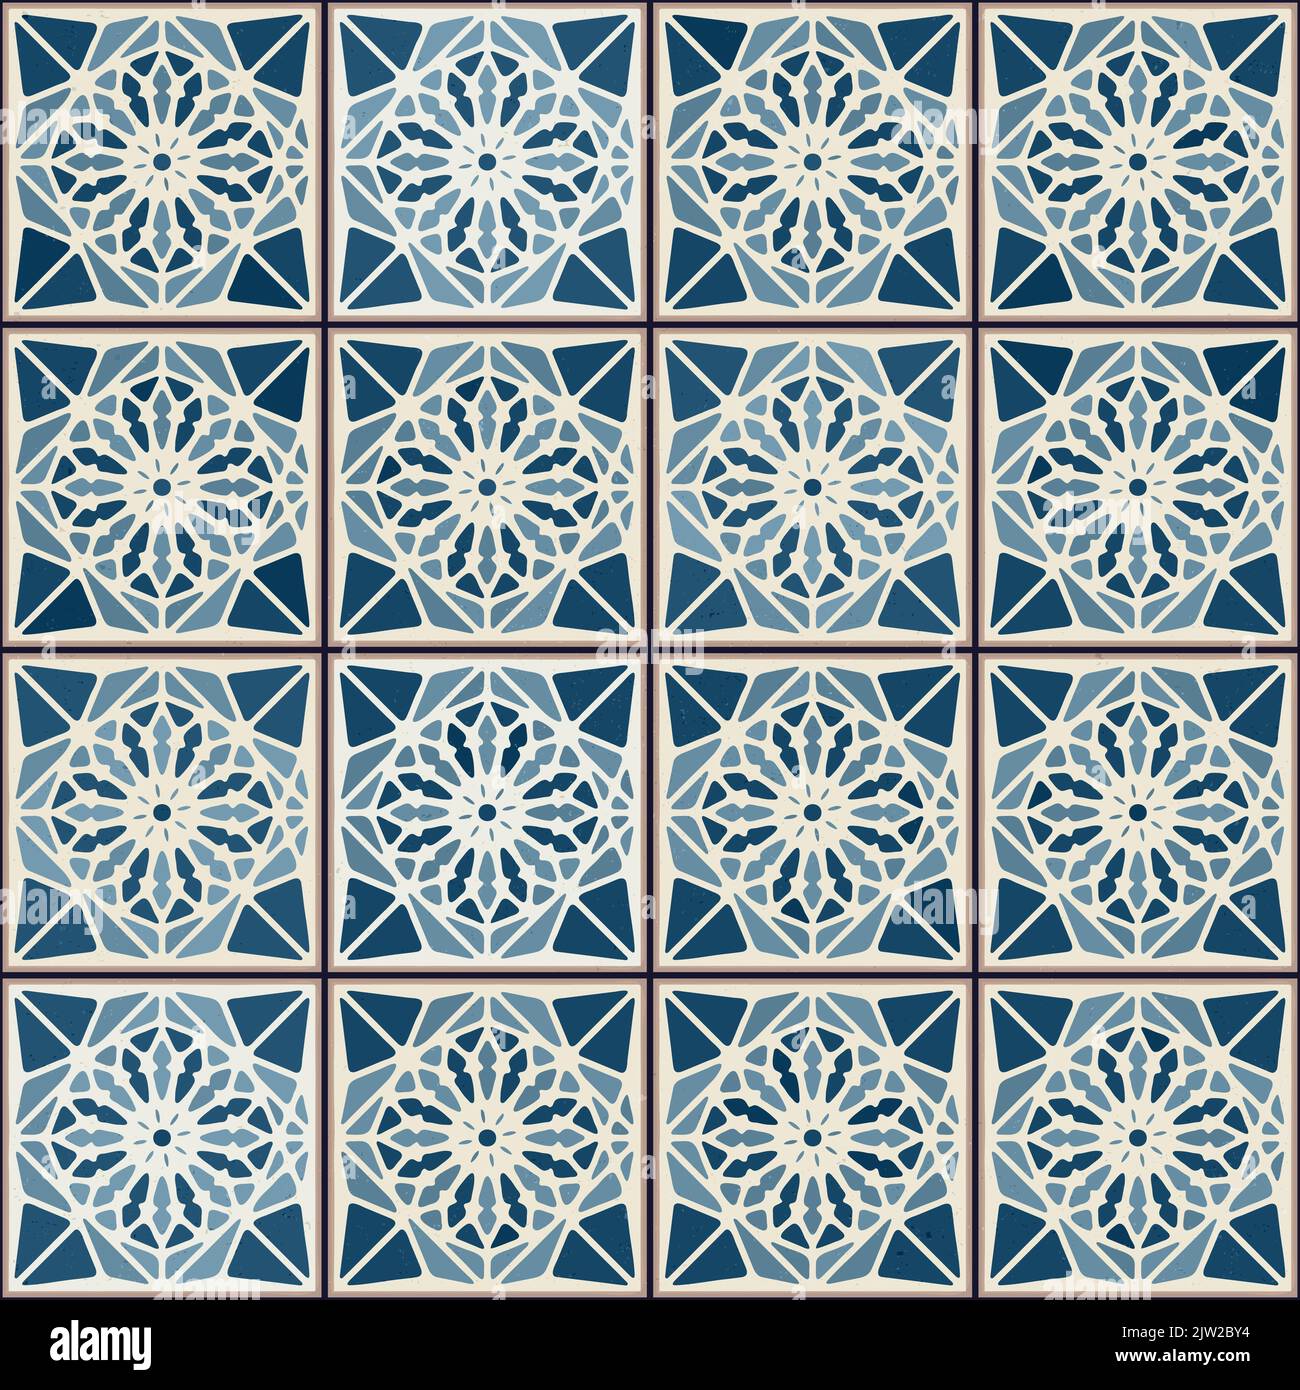 Vintage ceramic tiles vector pattern Stock Photo